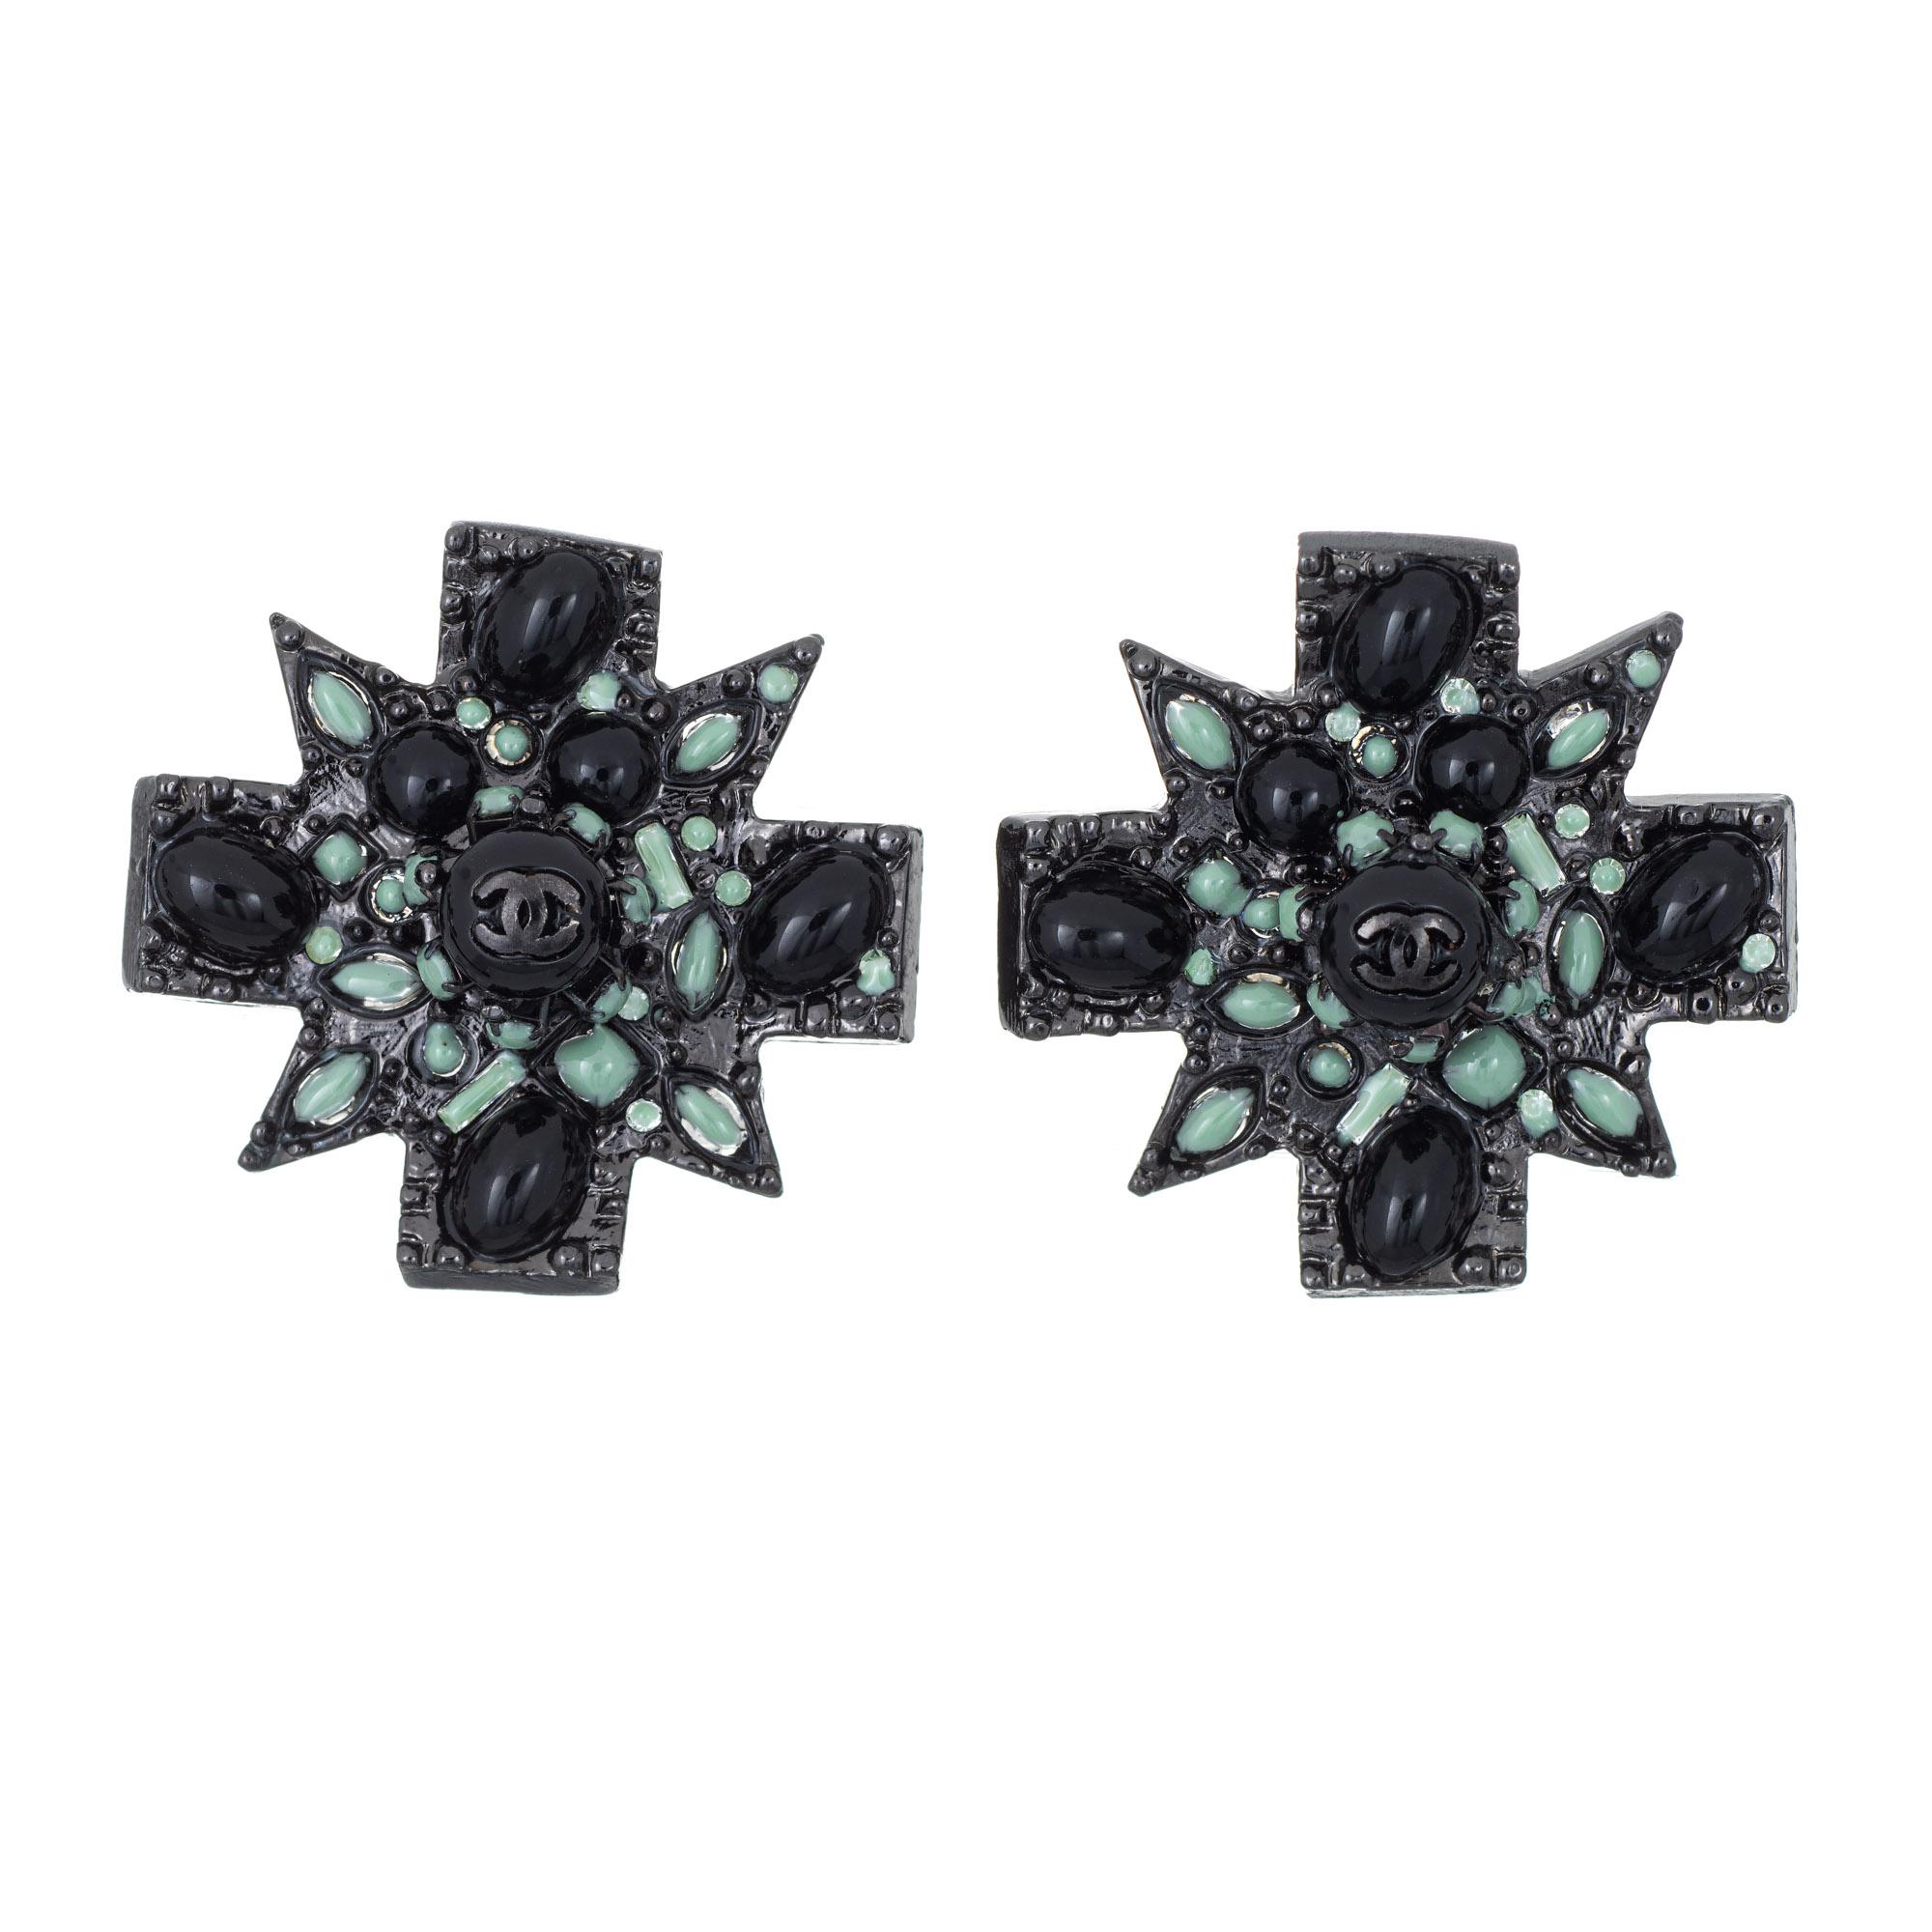 Gothic Revival Chanel Large Black Cross Earrings c2011 Clip On Green Enamel CC Logo Gothic For Sale